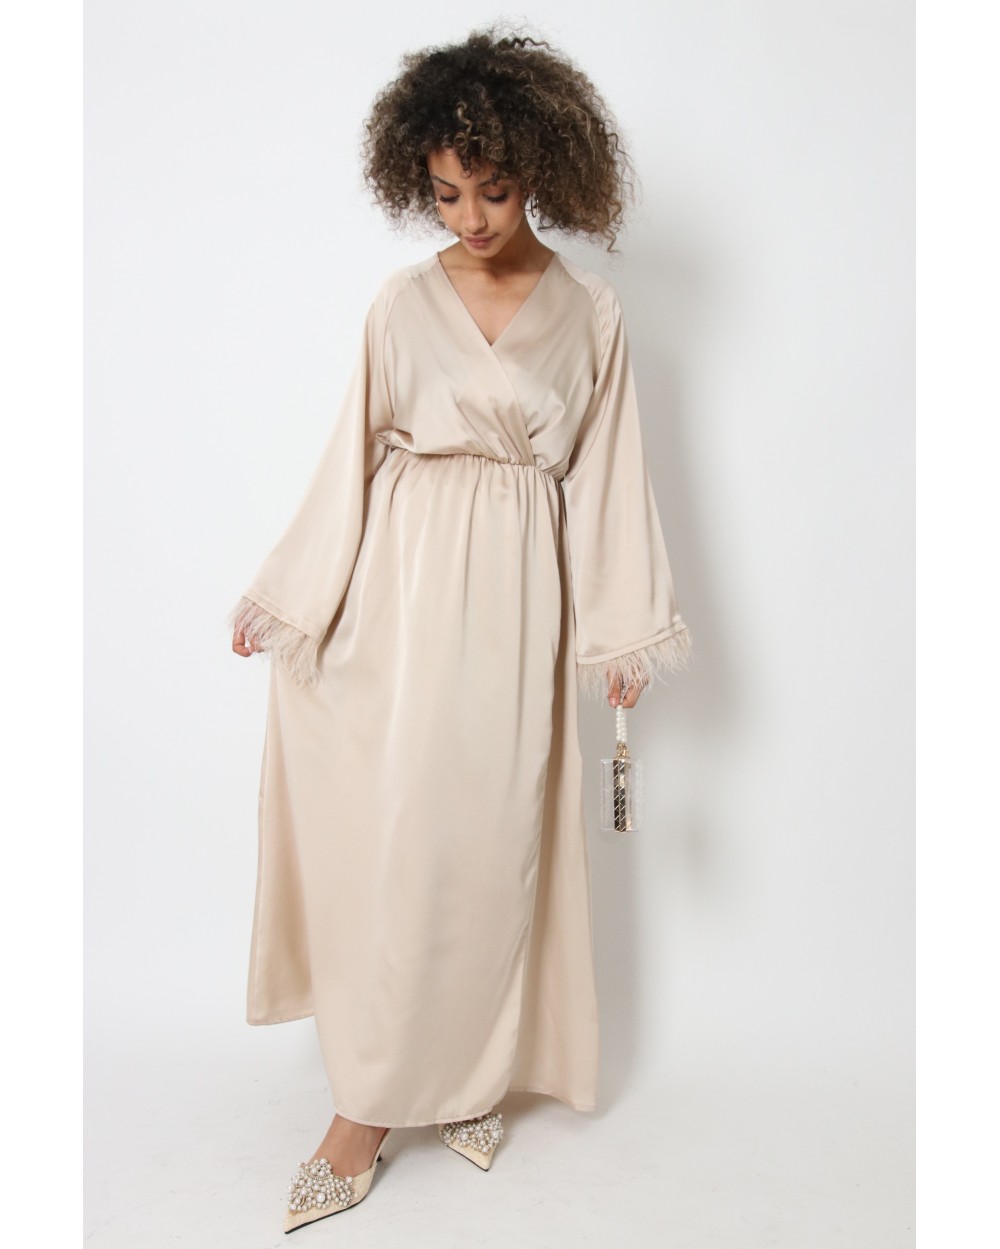 Silk nightgown Creamy. Alisee.